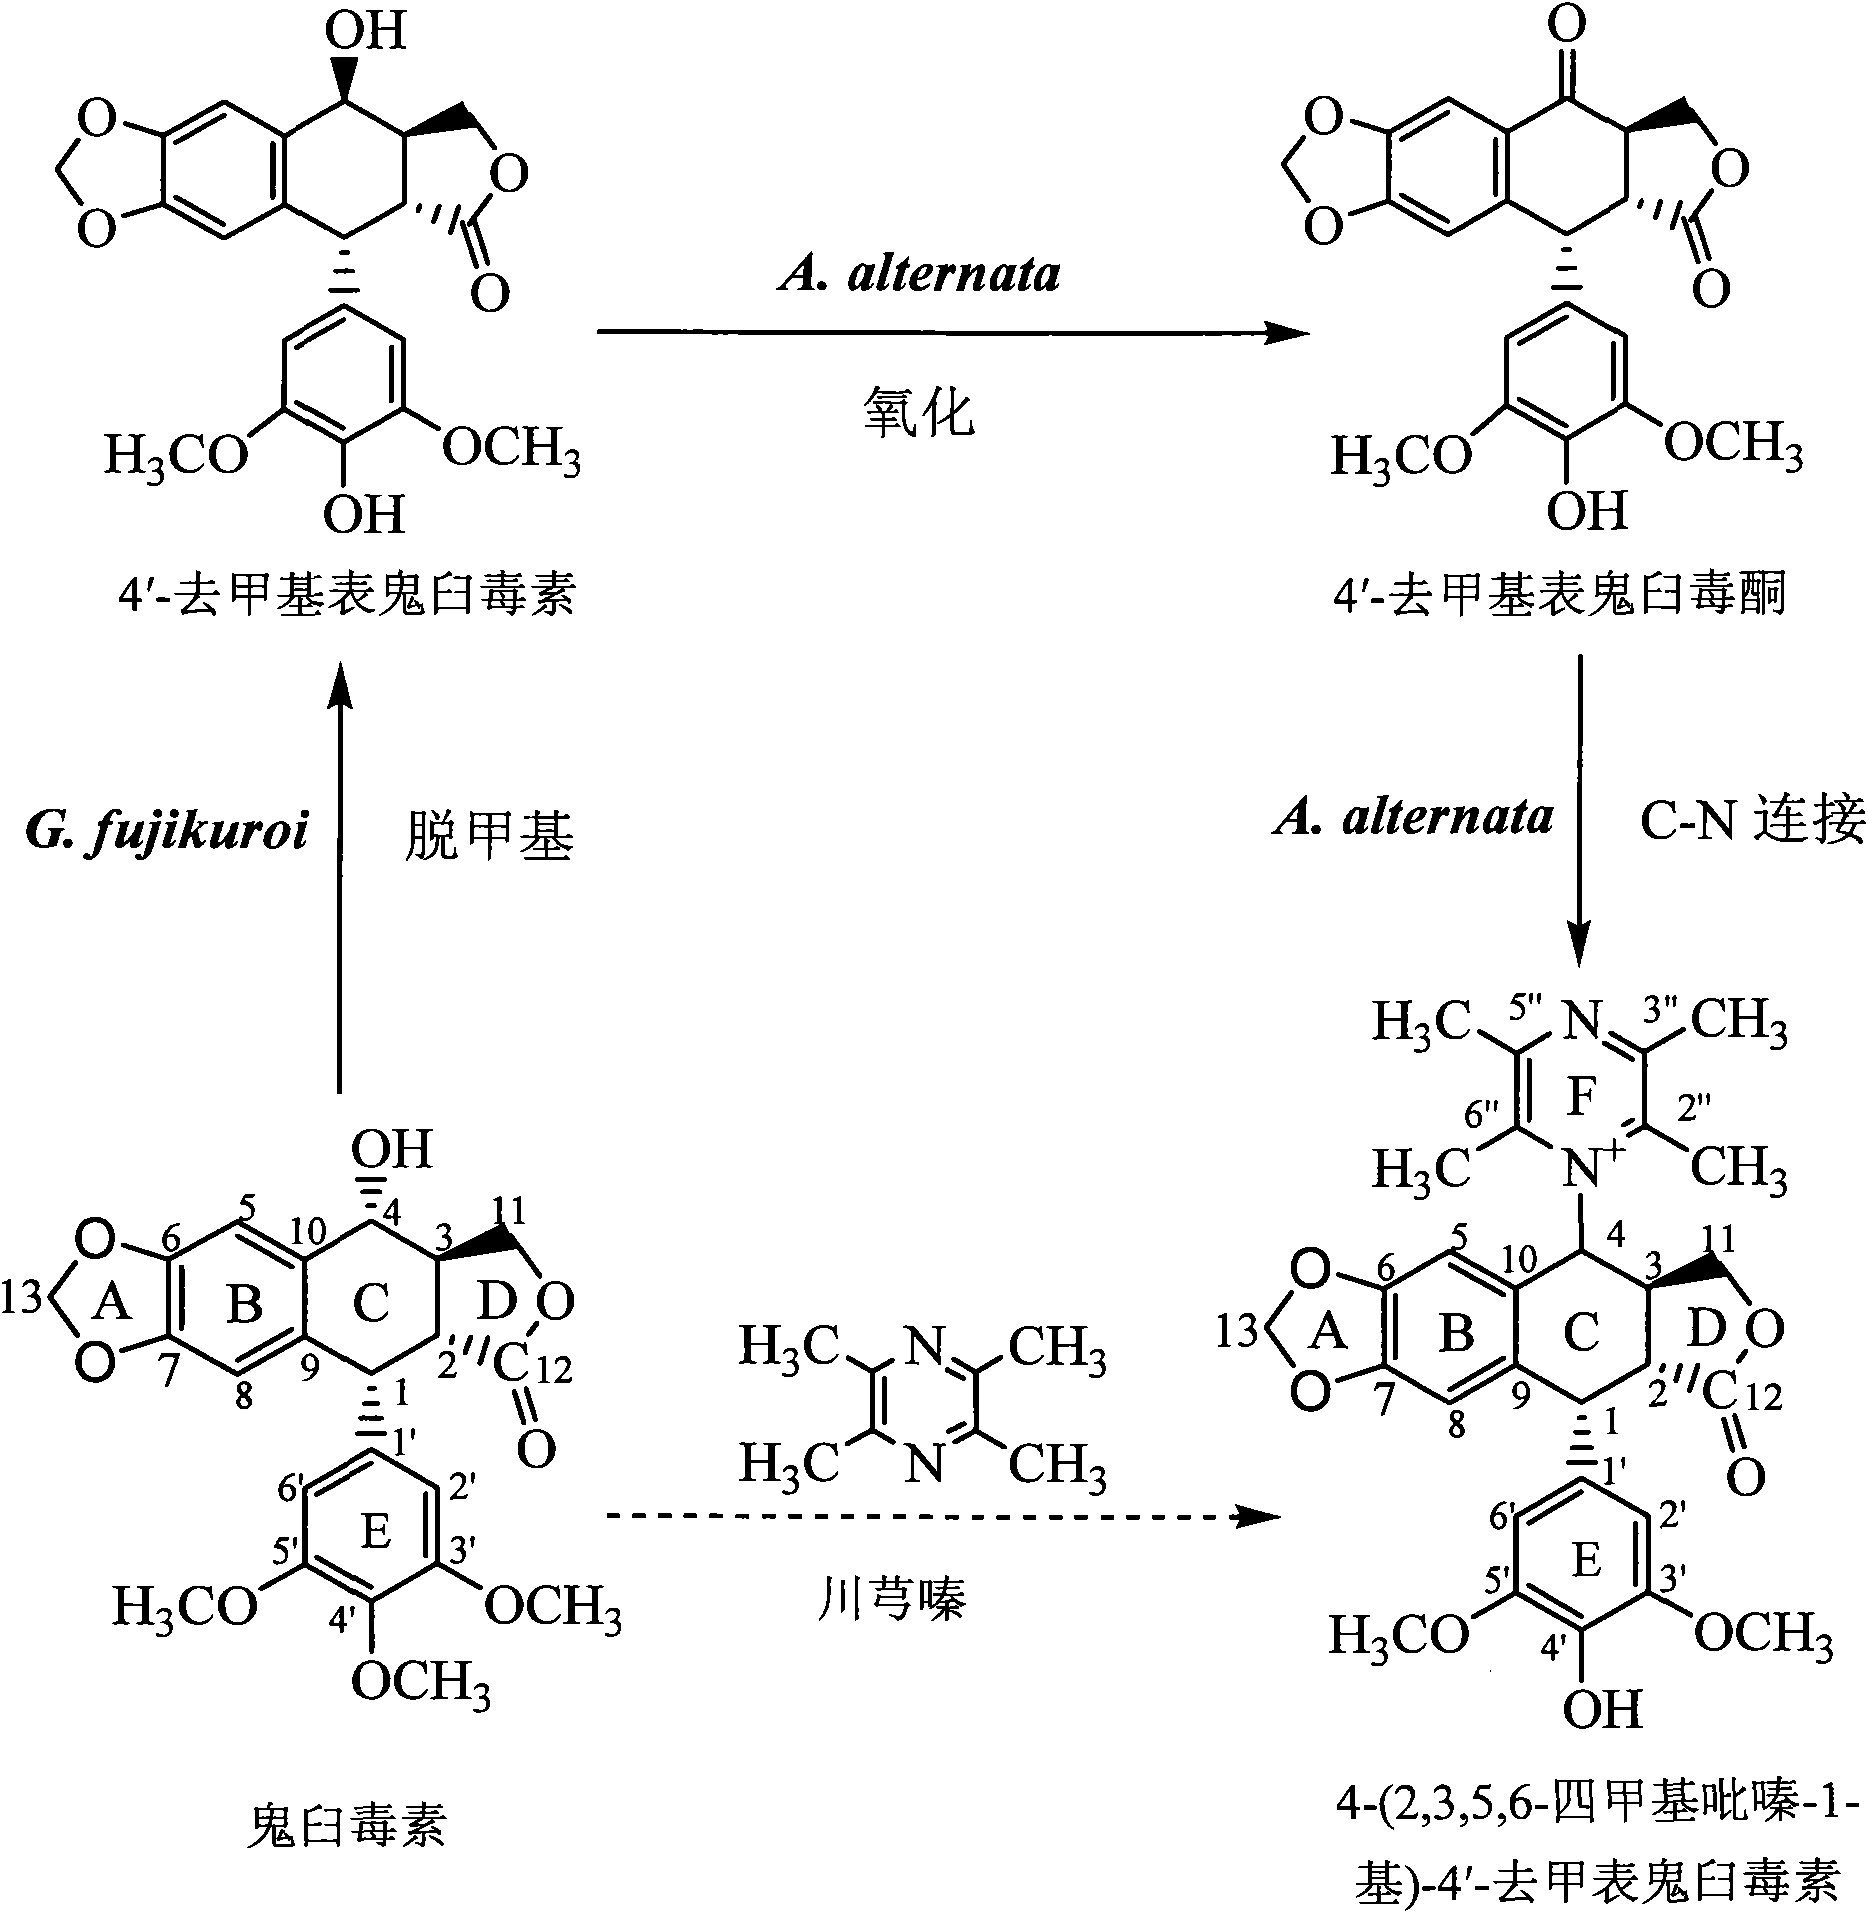 Biotransformation and purification method of 4-(2,3,5,6-tetramethylpyrazine-1-group)-4'-demethylepipodophyllotoxin